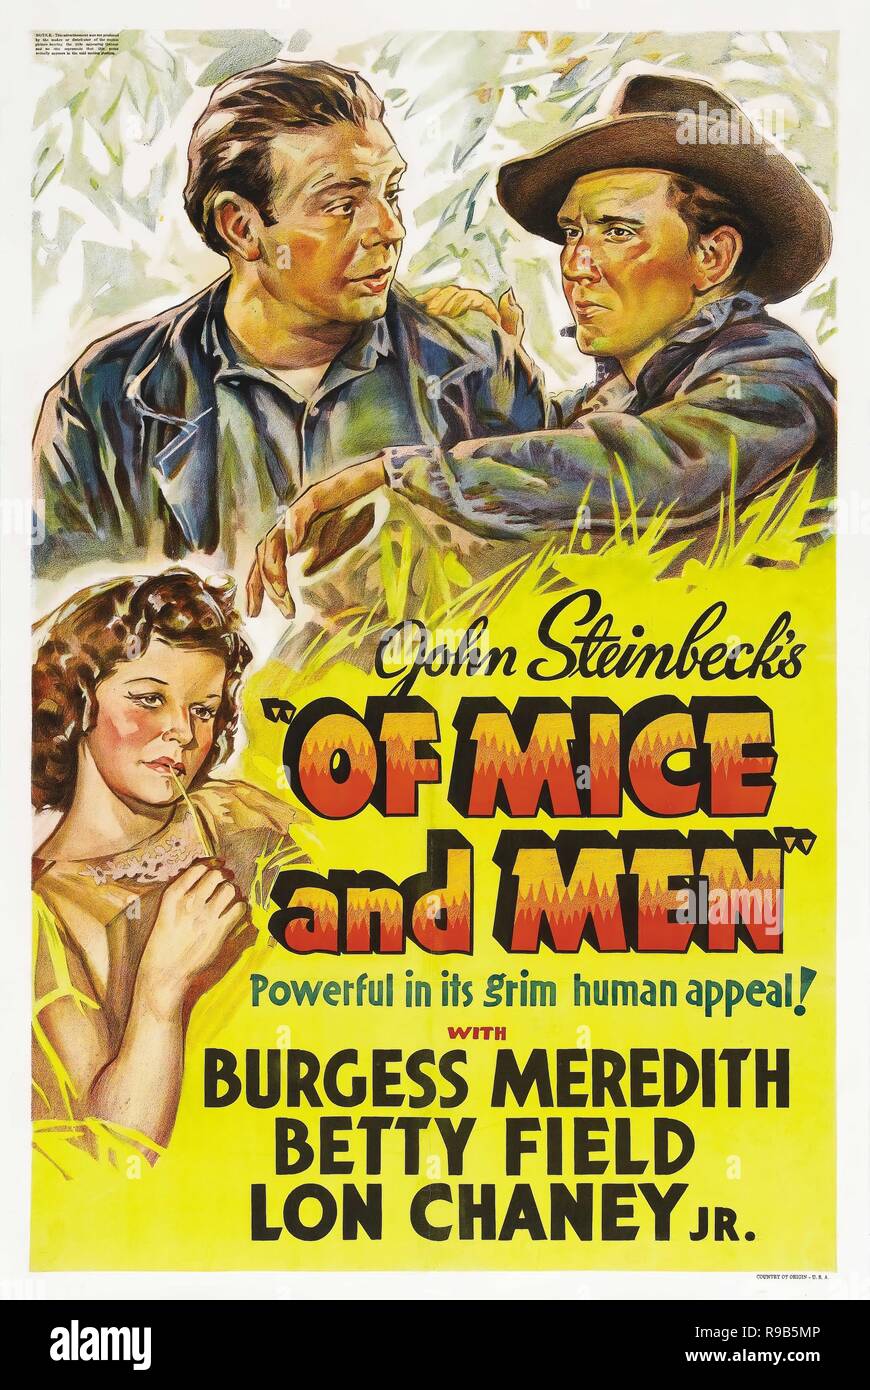 Original film title: OF MICE AND MEN. English title: OF MICE AND MEN. Year: 1939. Director: LEWIS MILESTONE. Credit: UNITED ARTISTS / Album Stock Photo